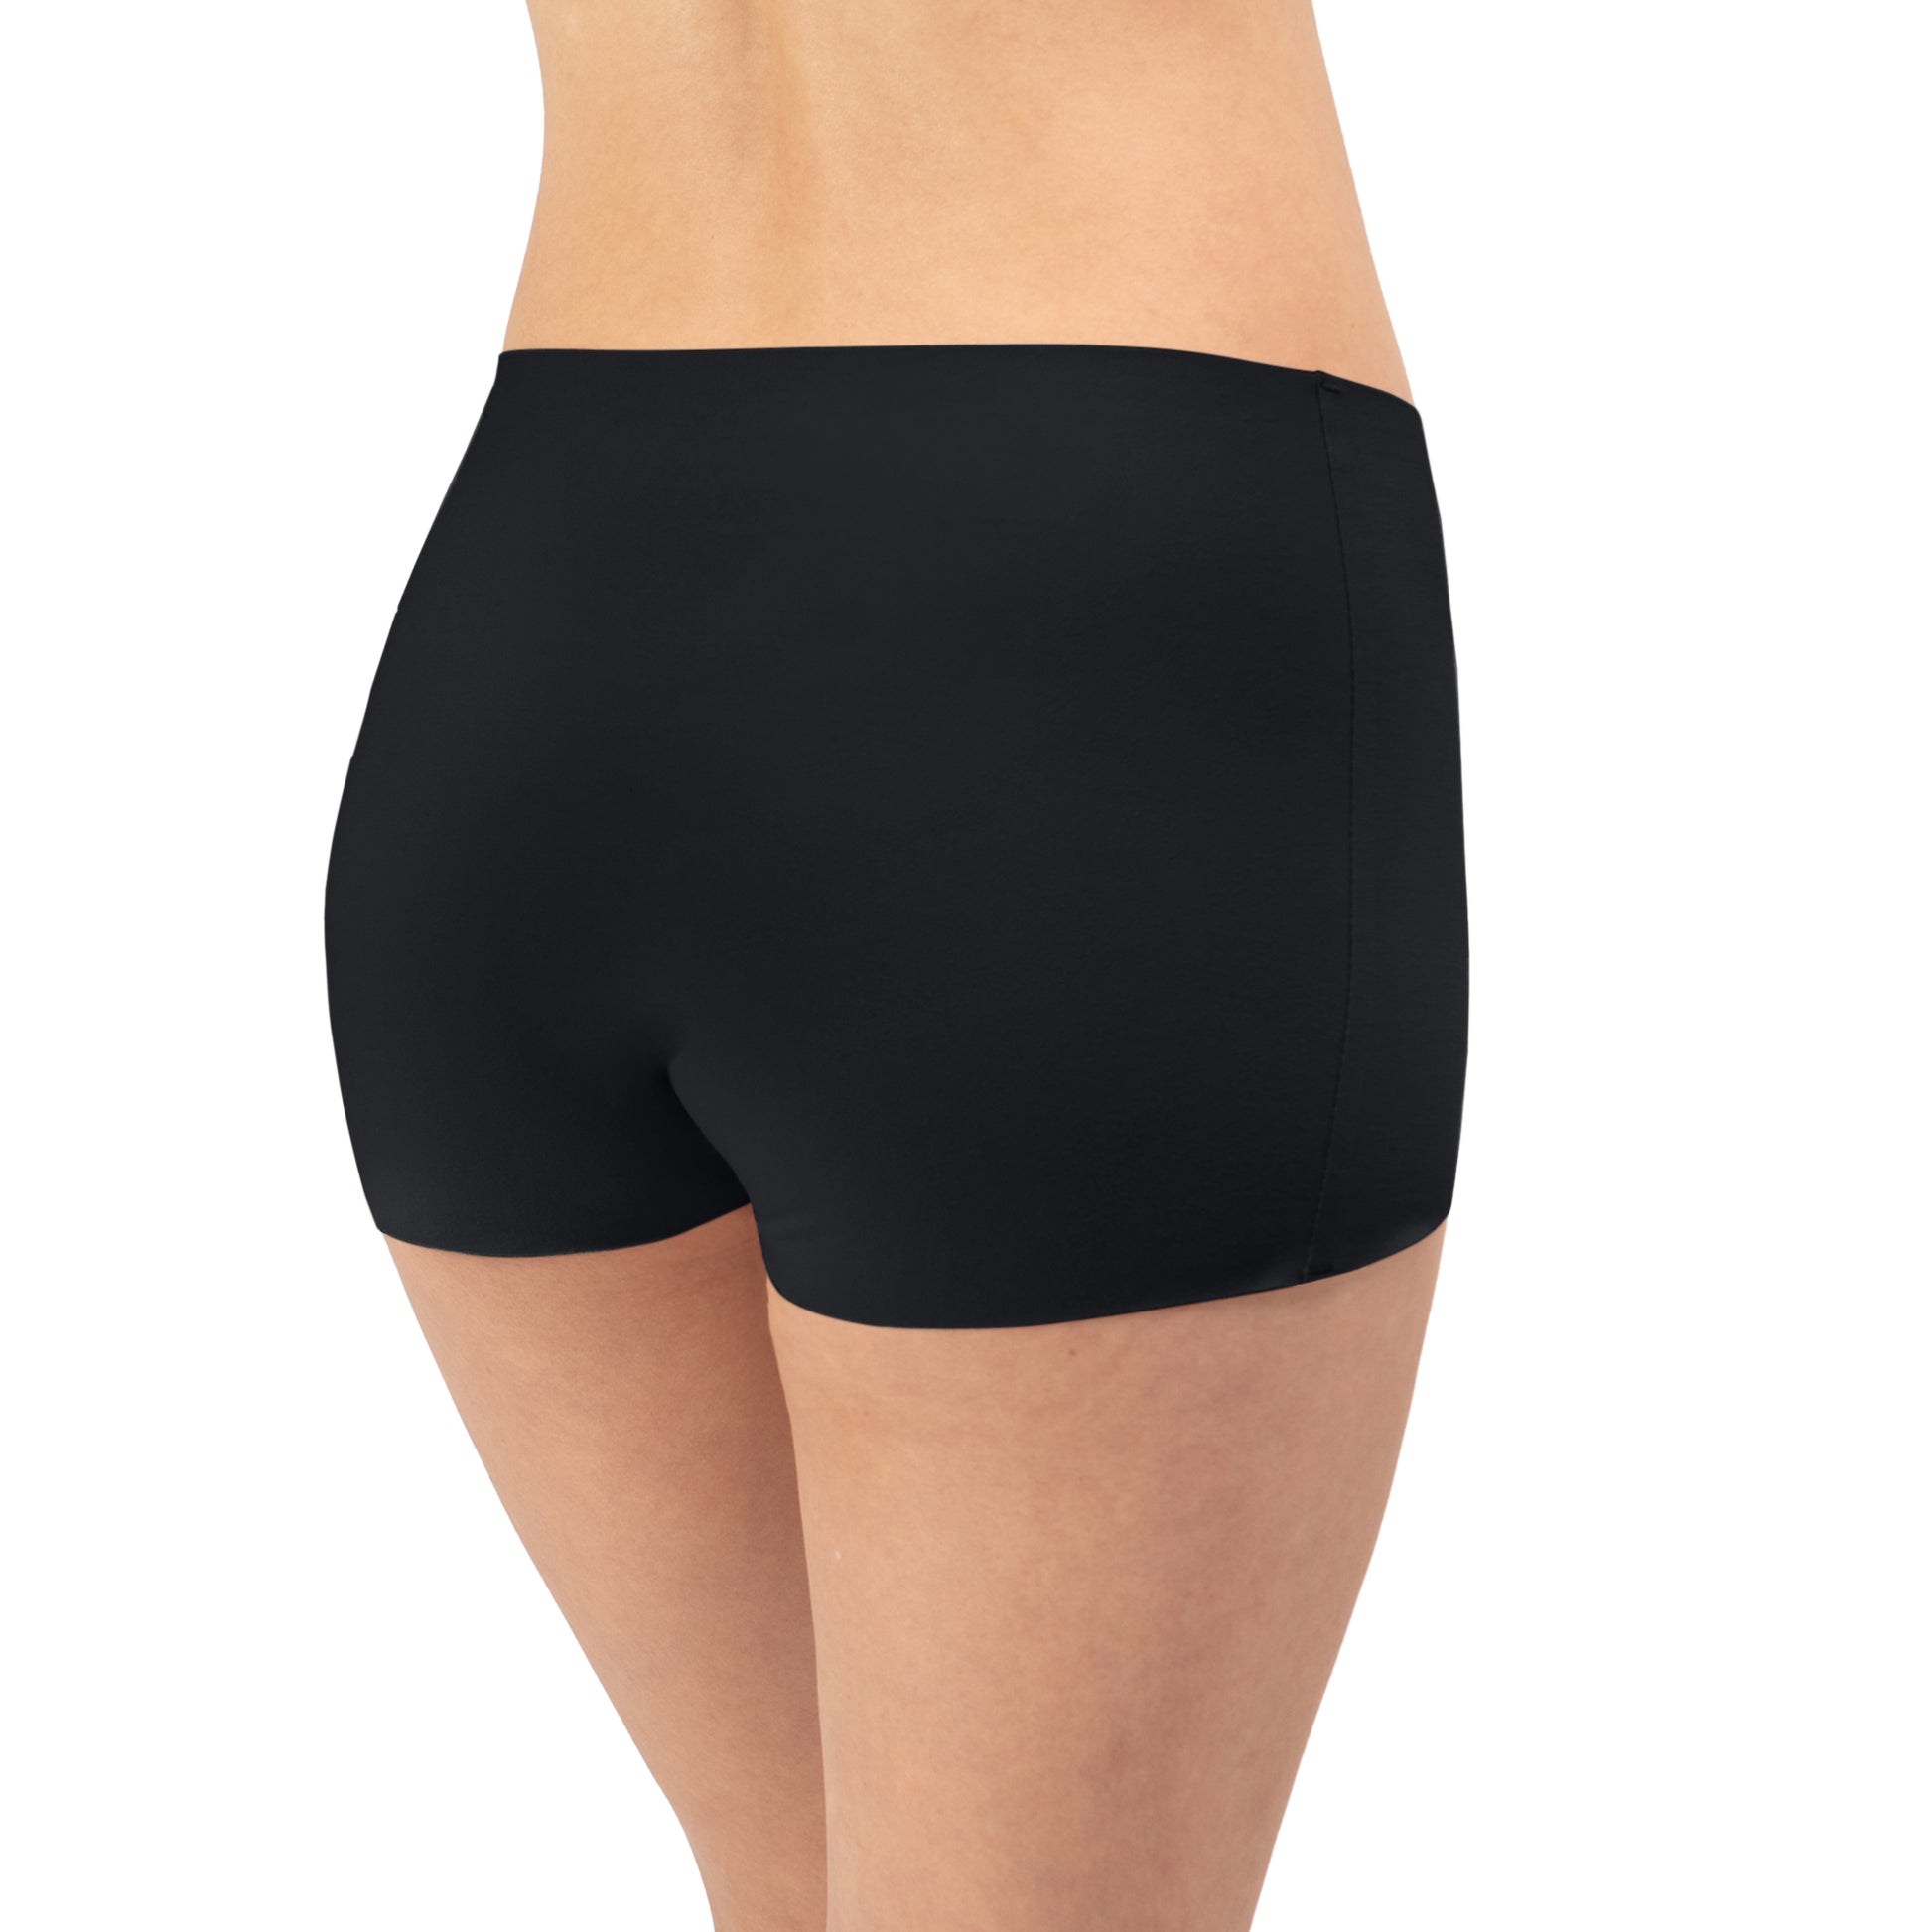 Women's Organic Cotton Shortie Underwear in color Black - Back View